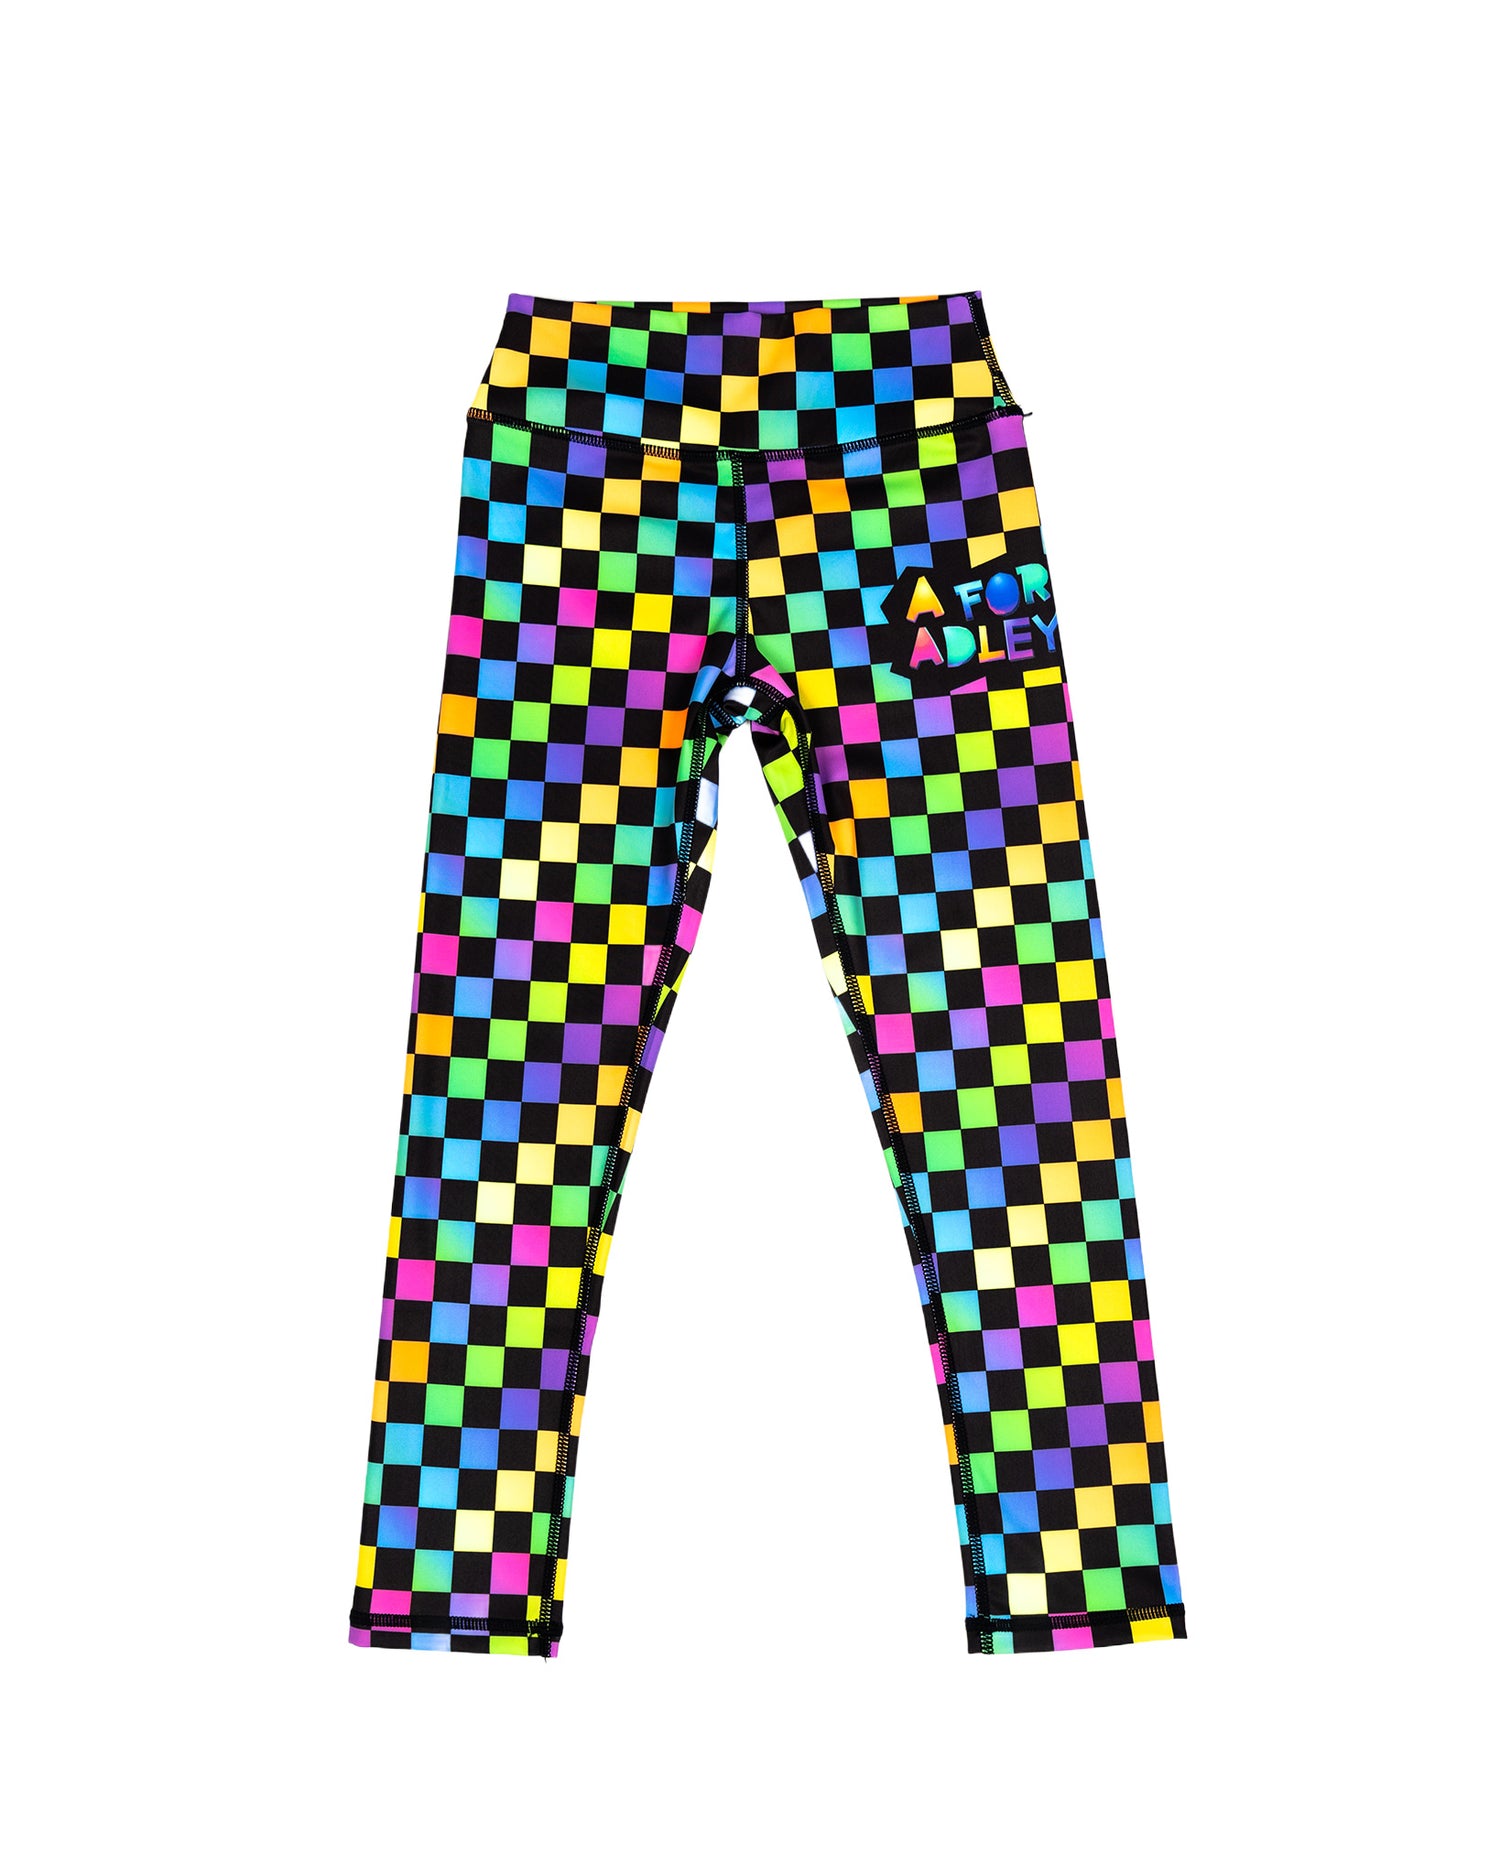 Adley's Neon Checkered Pants